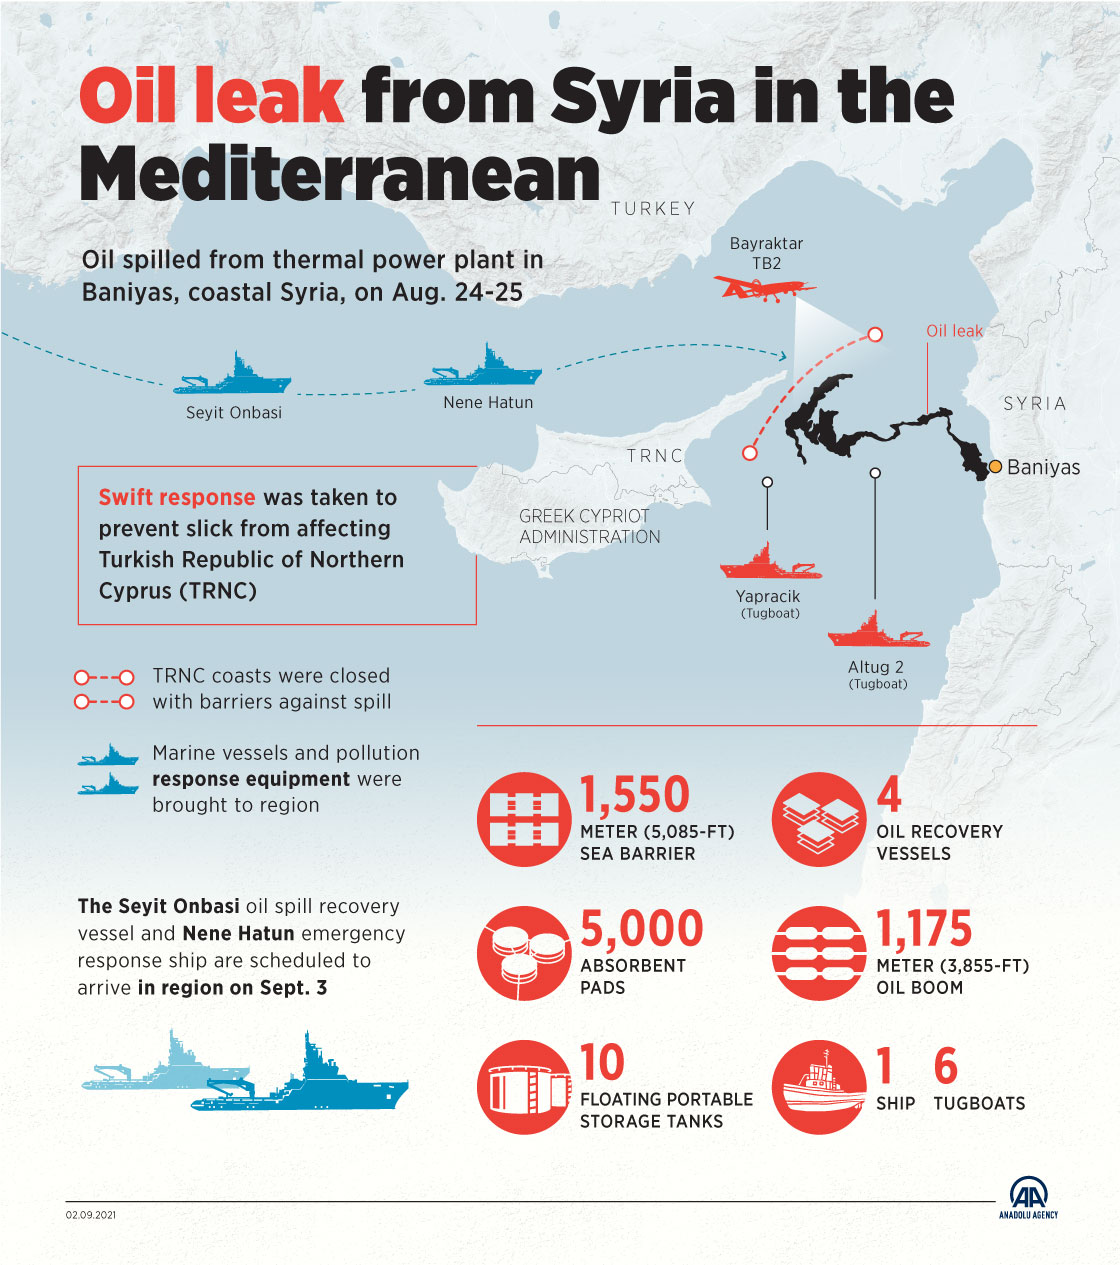 Oil leak from Syria in the Mediterranean